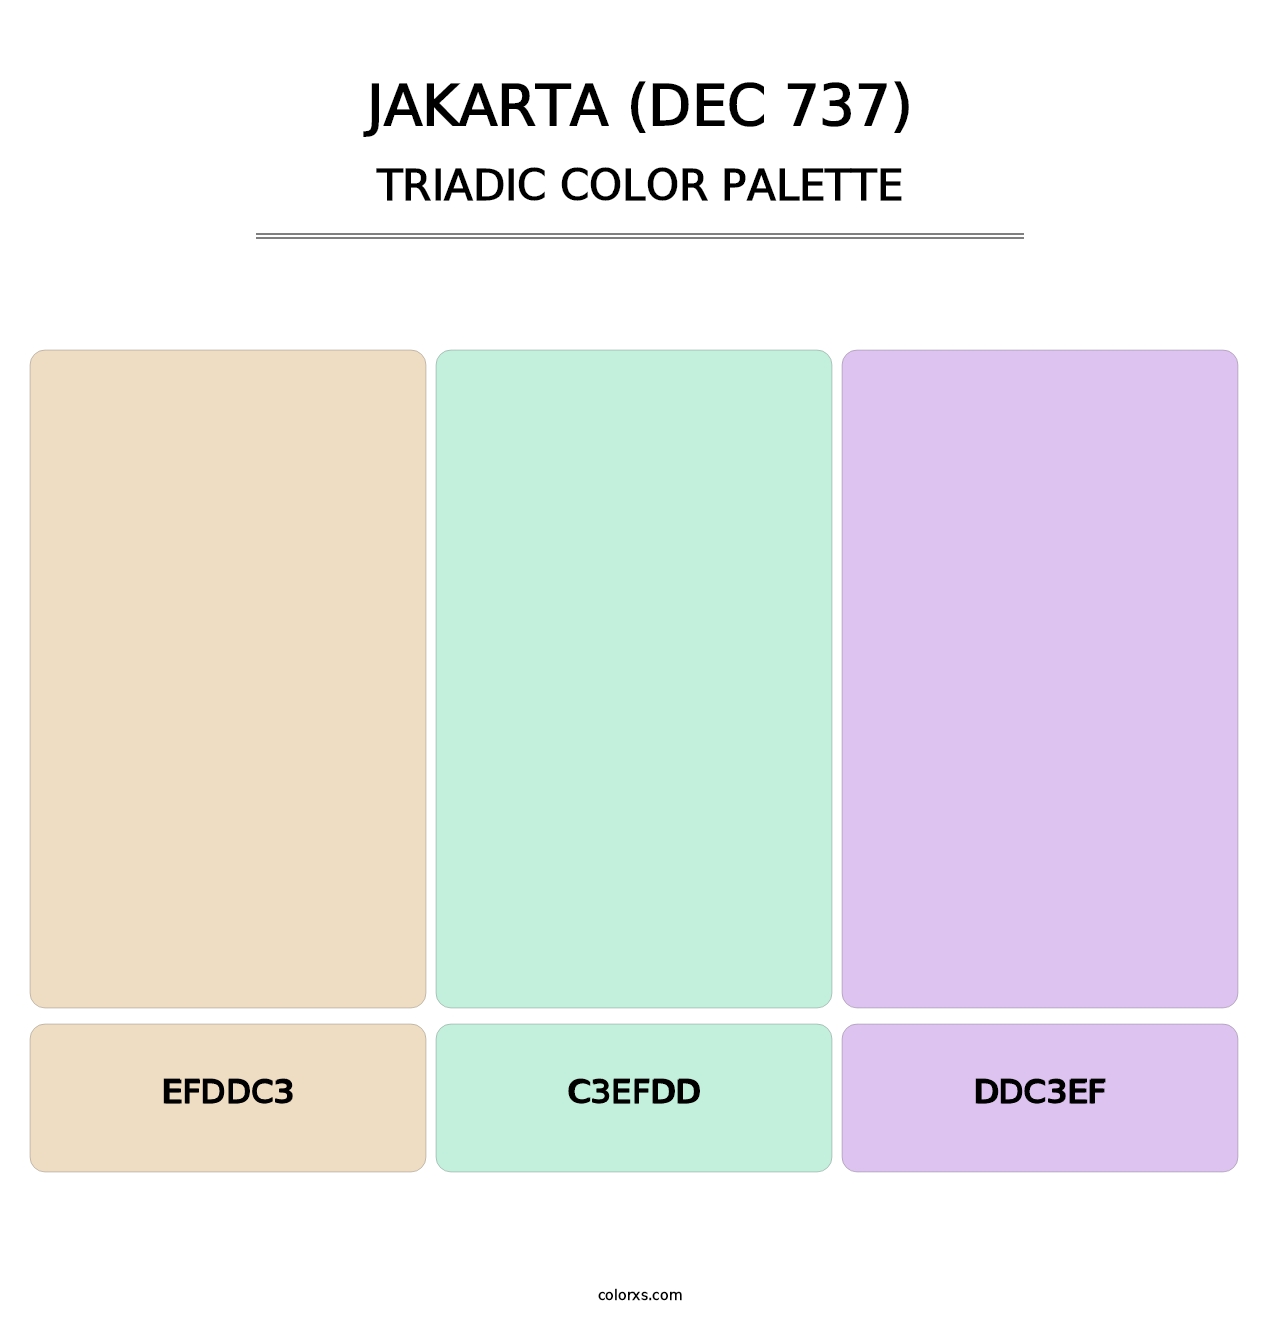 Jakarta (DEC 737) - Triadic Color Palette